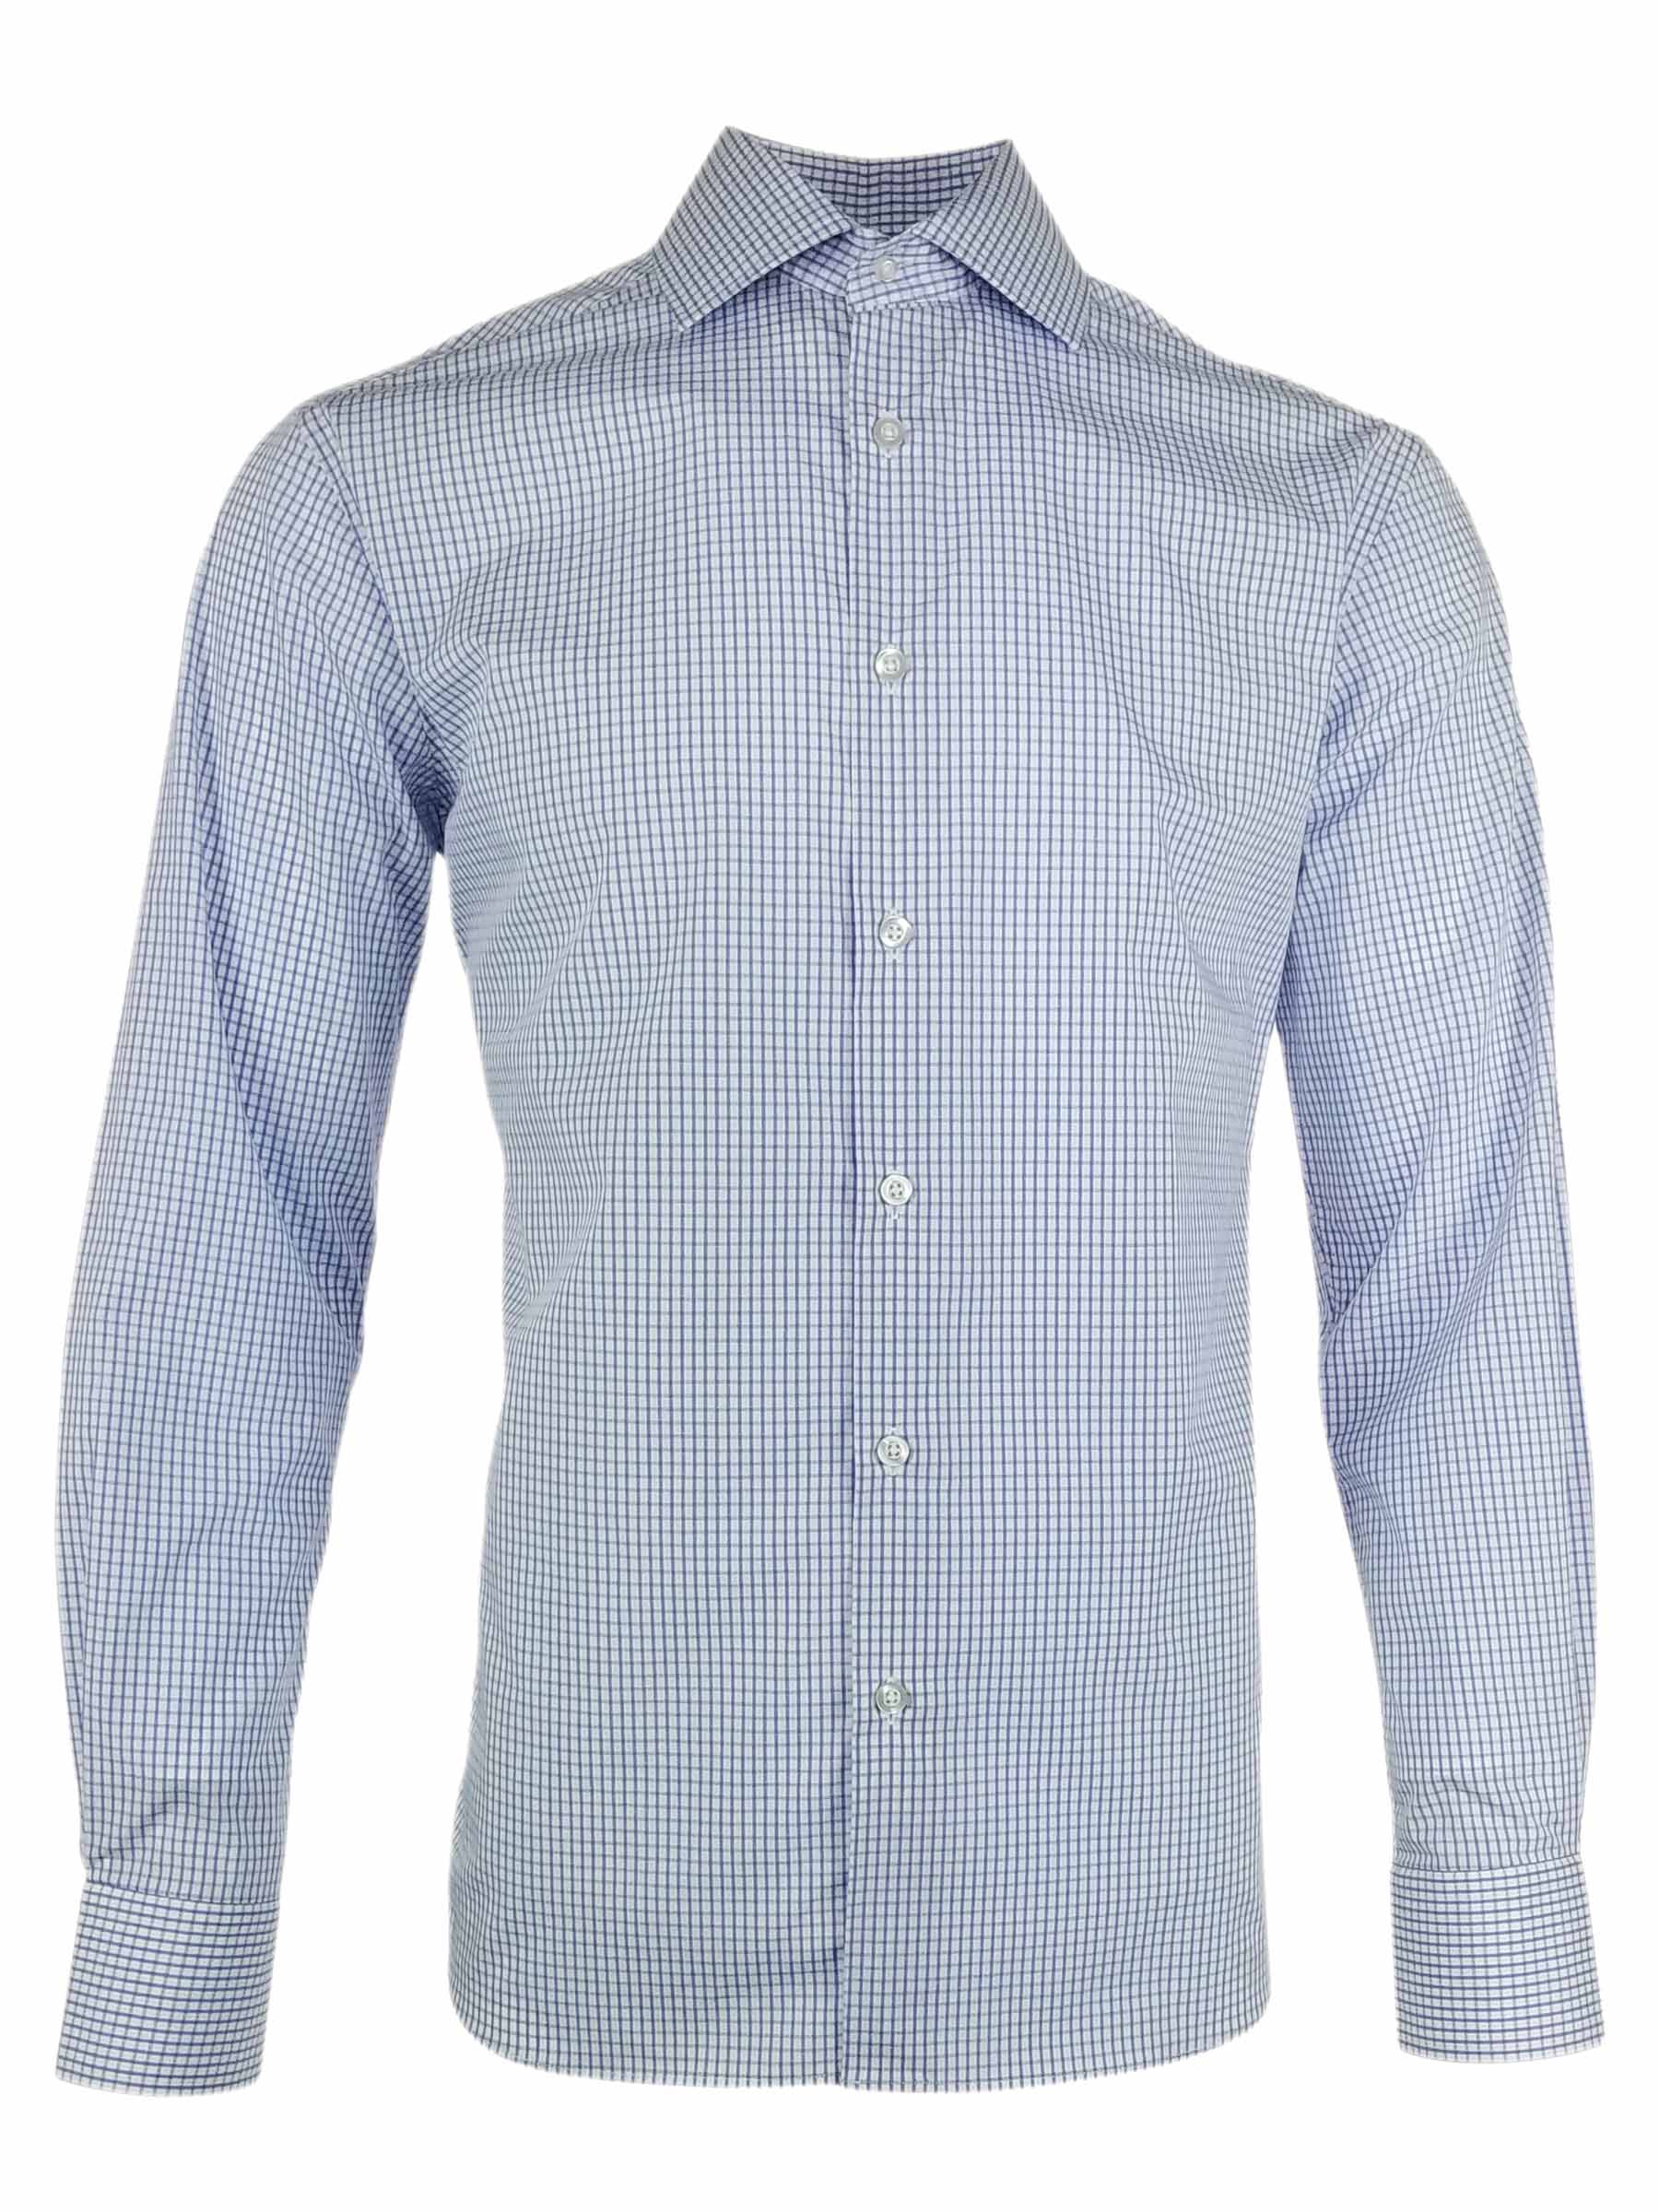 Men's New Sentinal Shirt - Blue White Check Long Sleeve - Uniform Edit